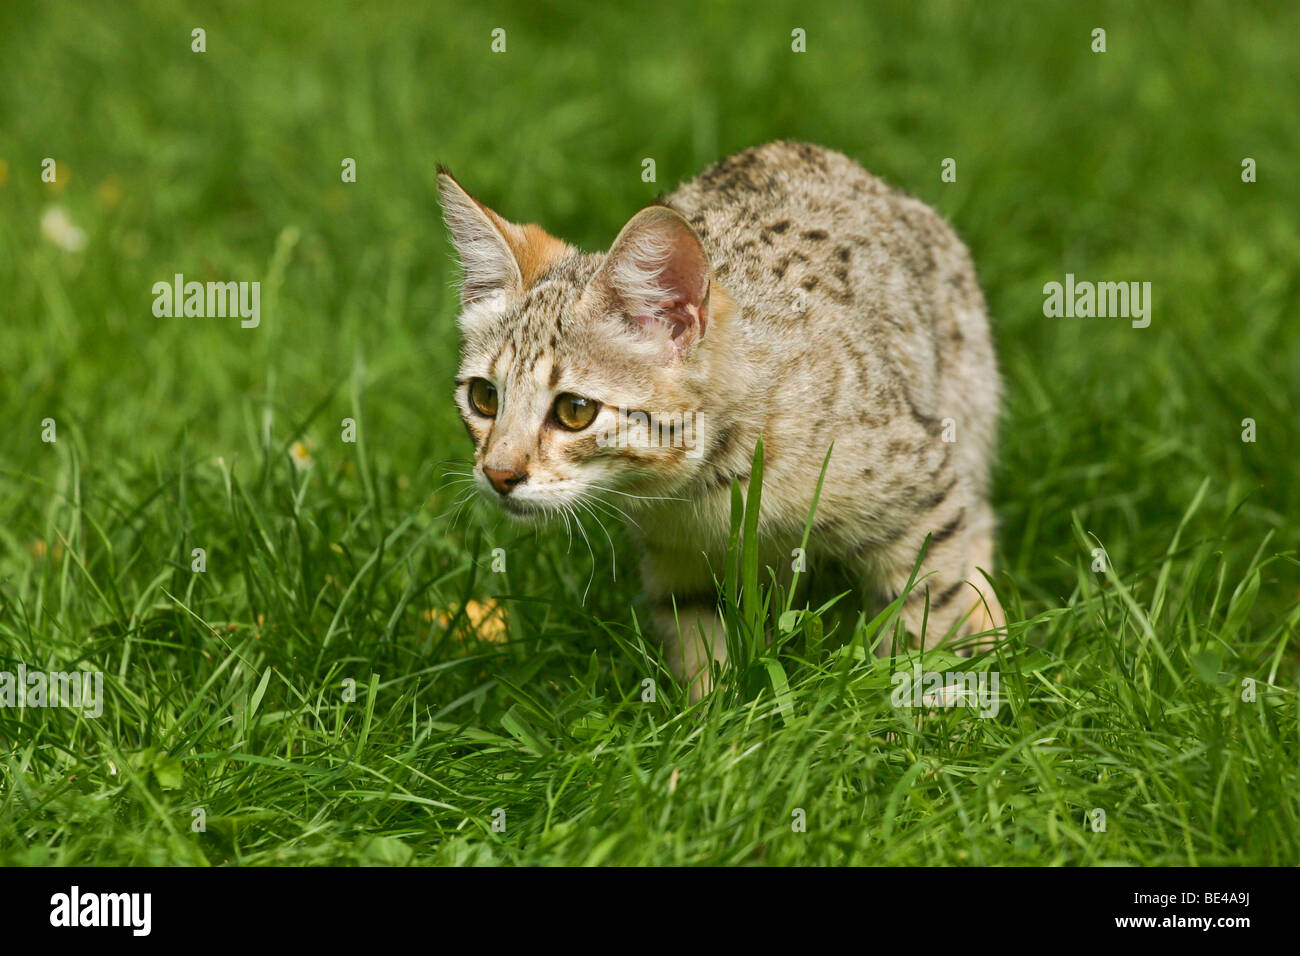 Savannah cat creeping through the grass Stock Photo